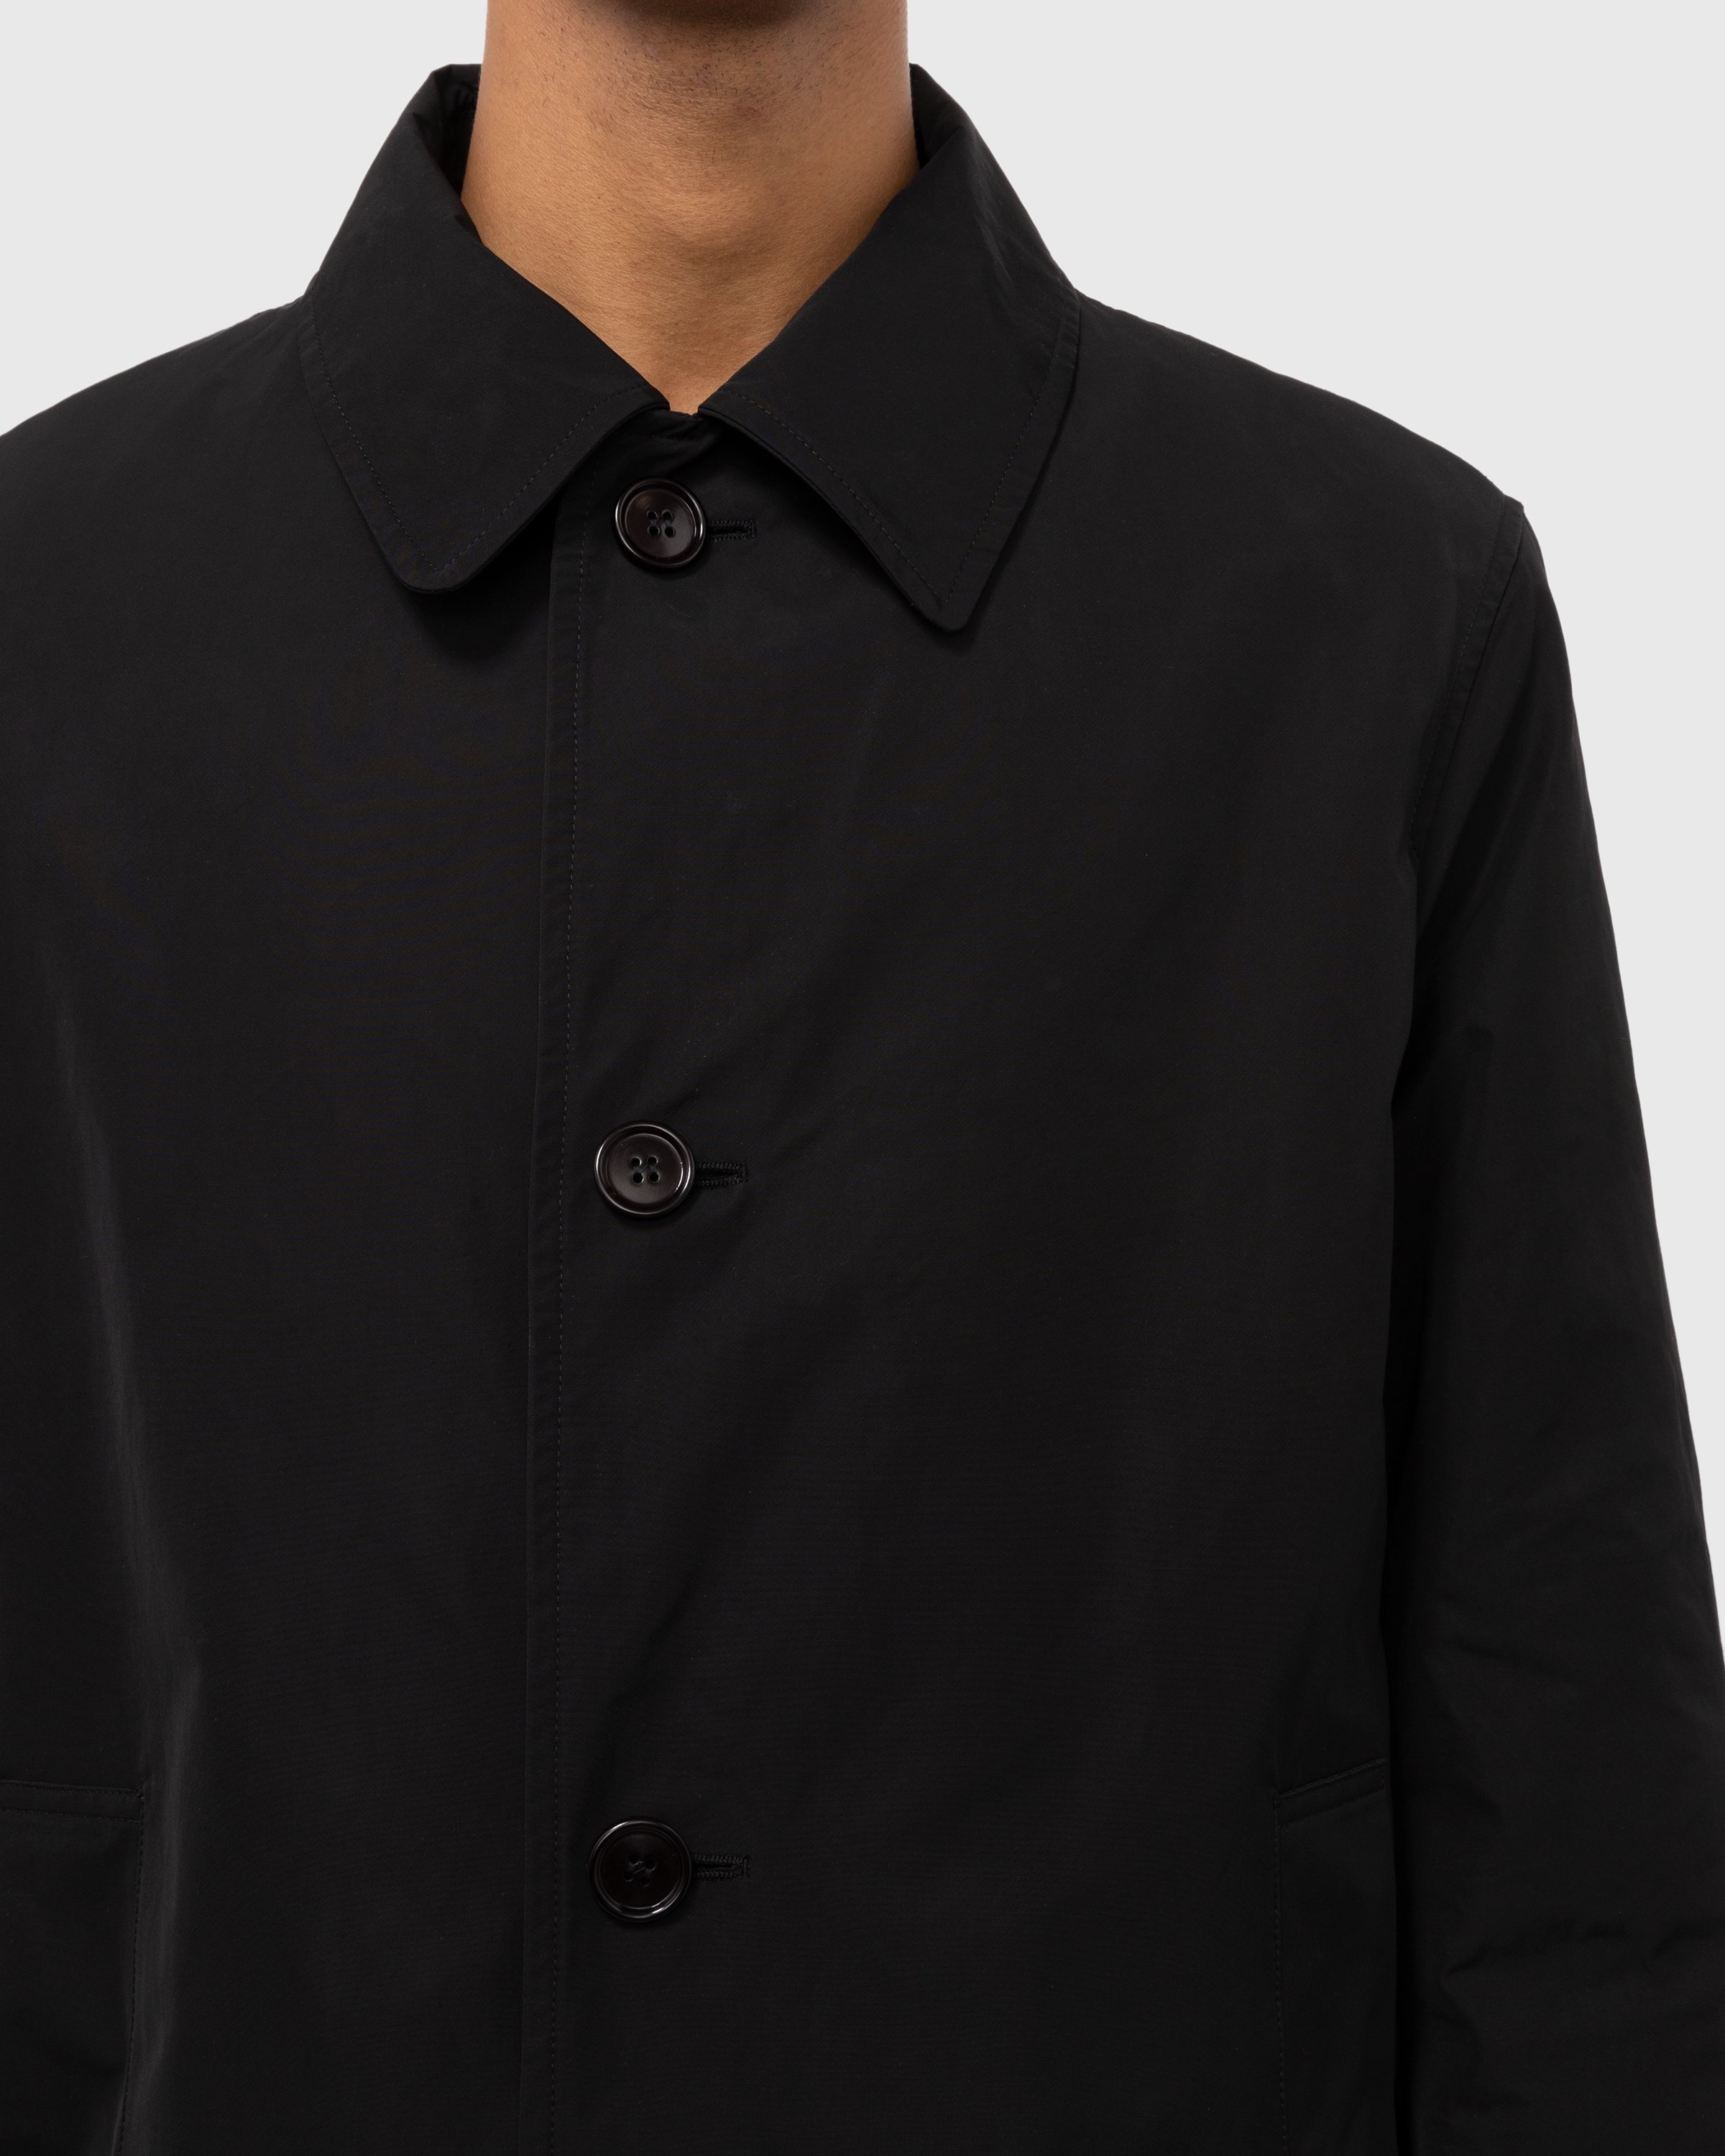 Dries van Noten – Rankle Coat Black - Outerwear - Black - Image 5